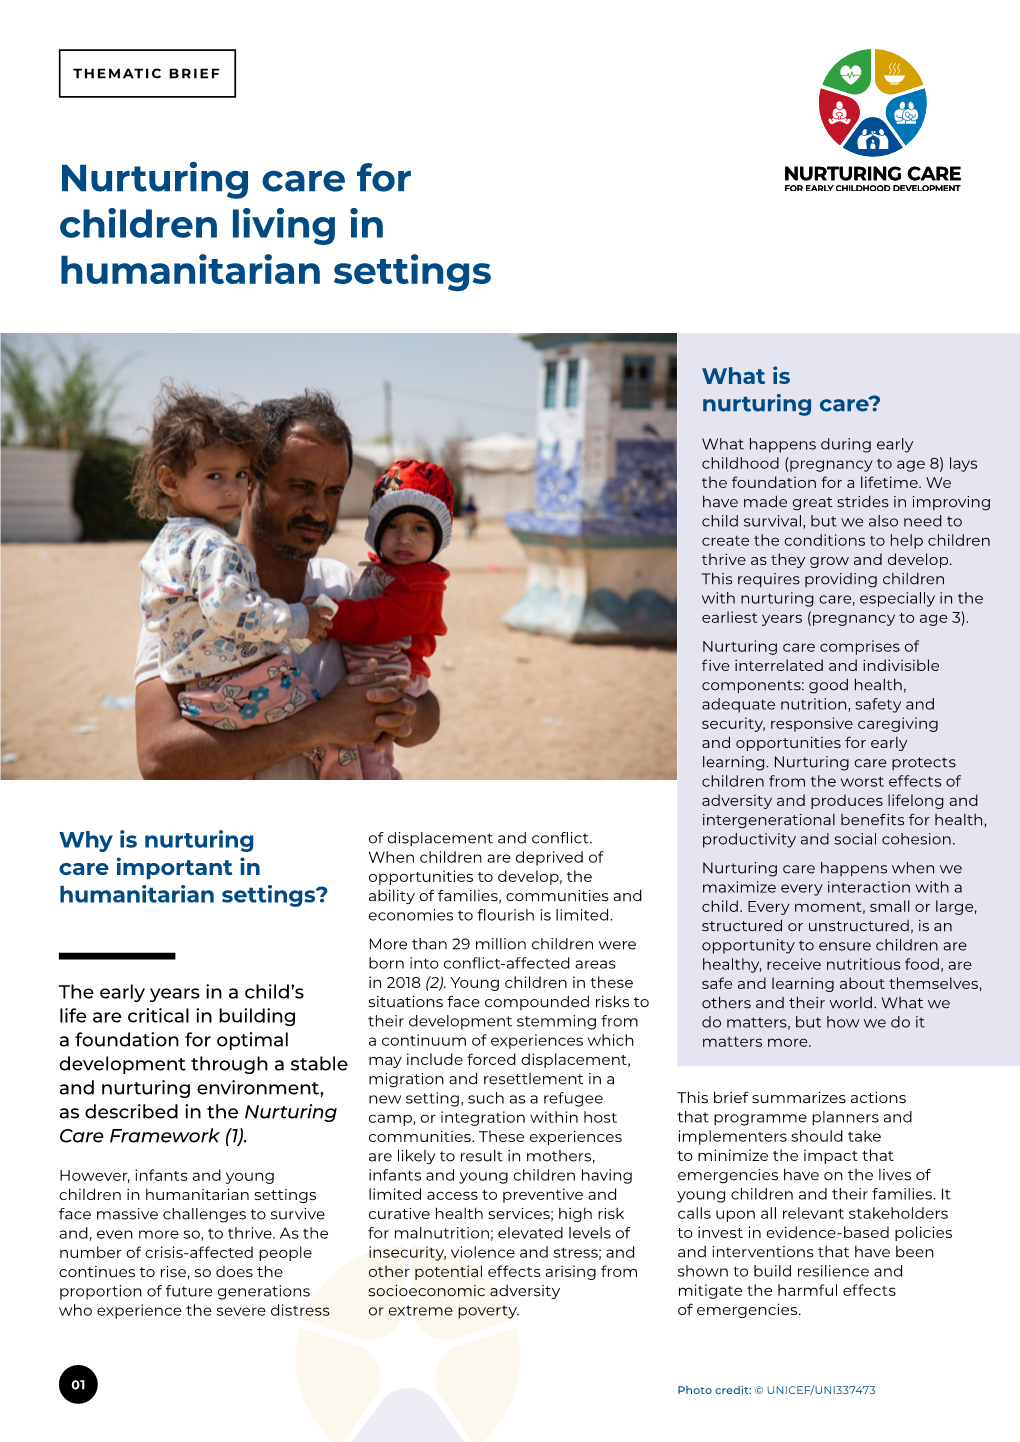 Nurturing Care for Children Living in Humanitarian Settings